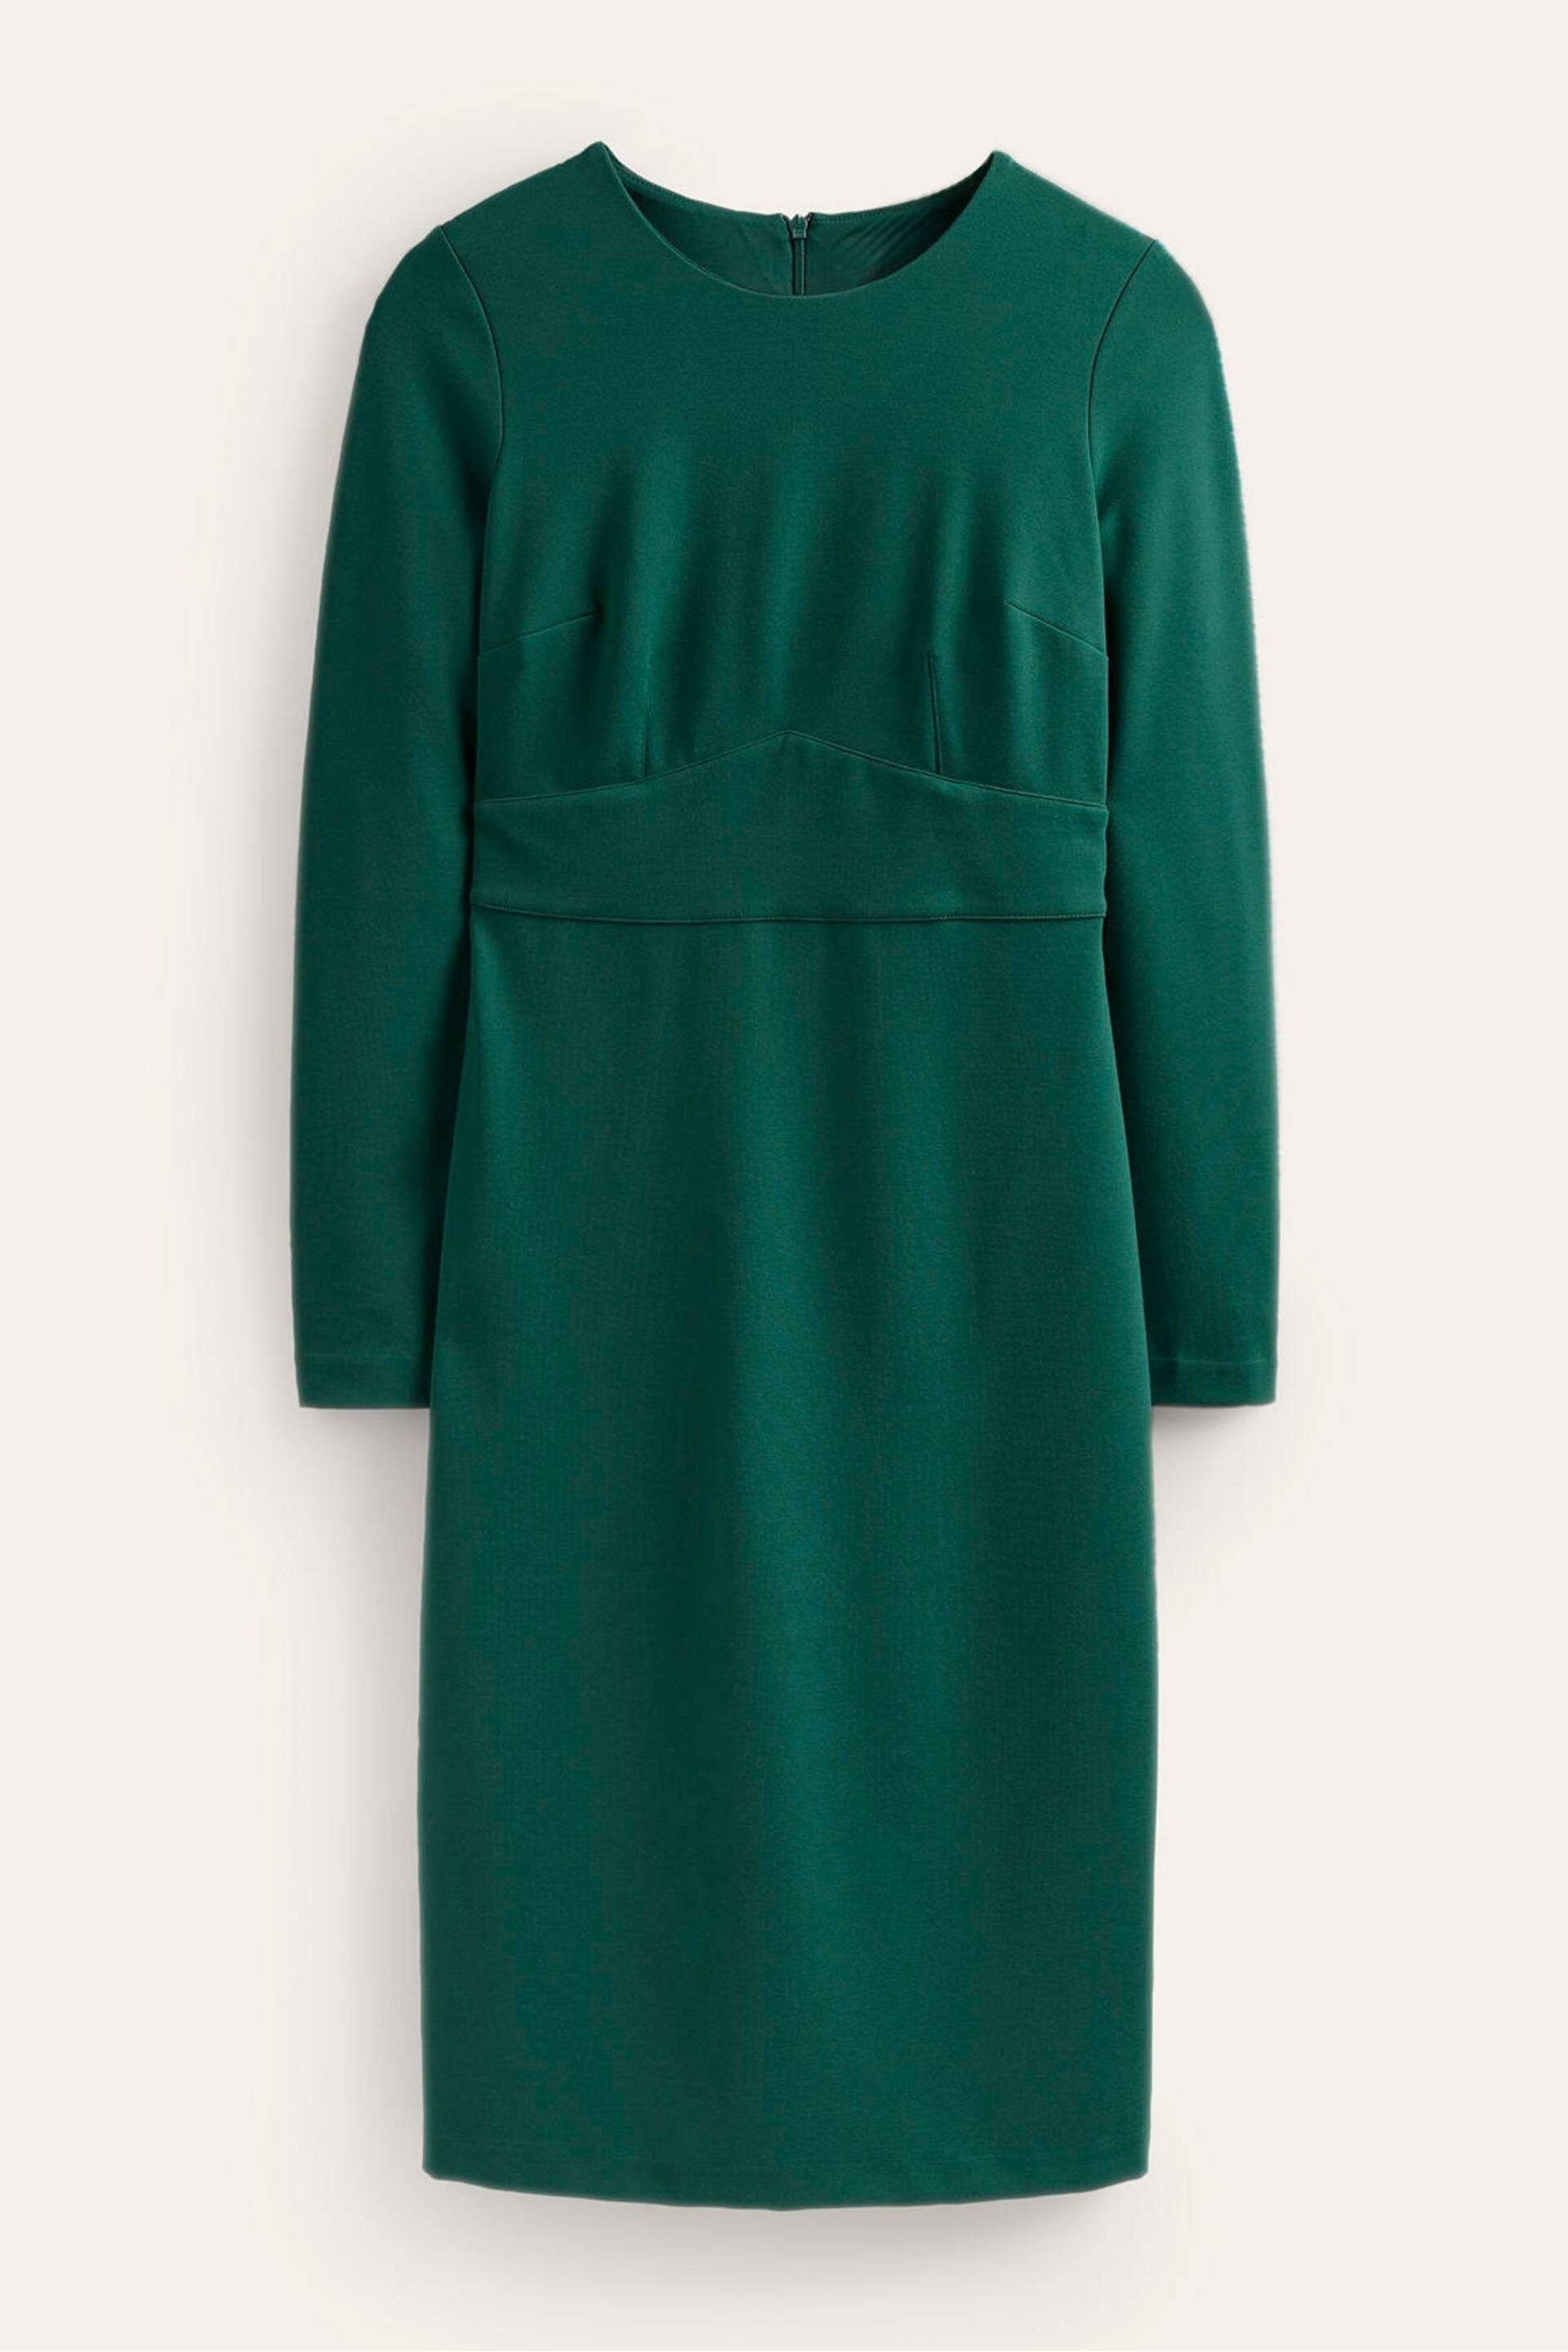 Boden Green Nadia Jersey Midi Dress - Image 6 of 6